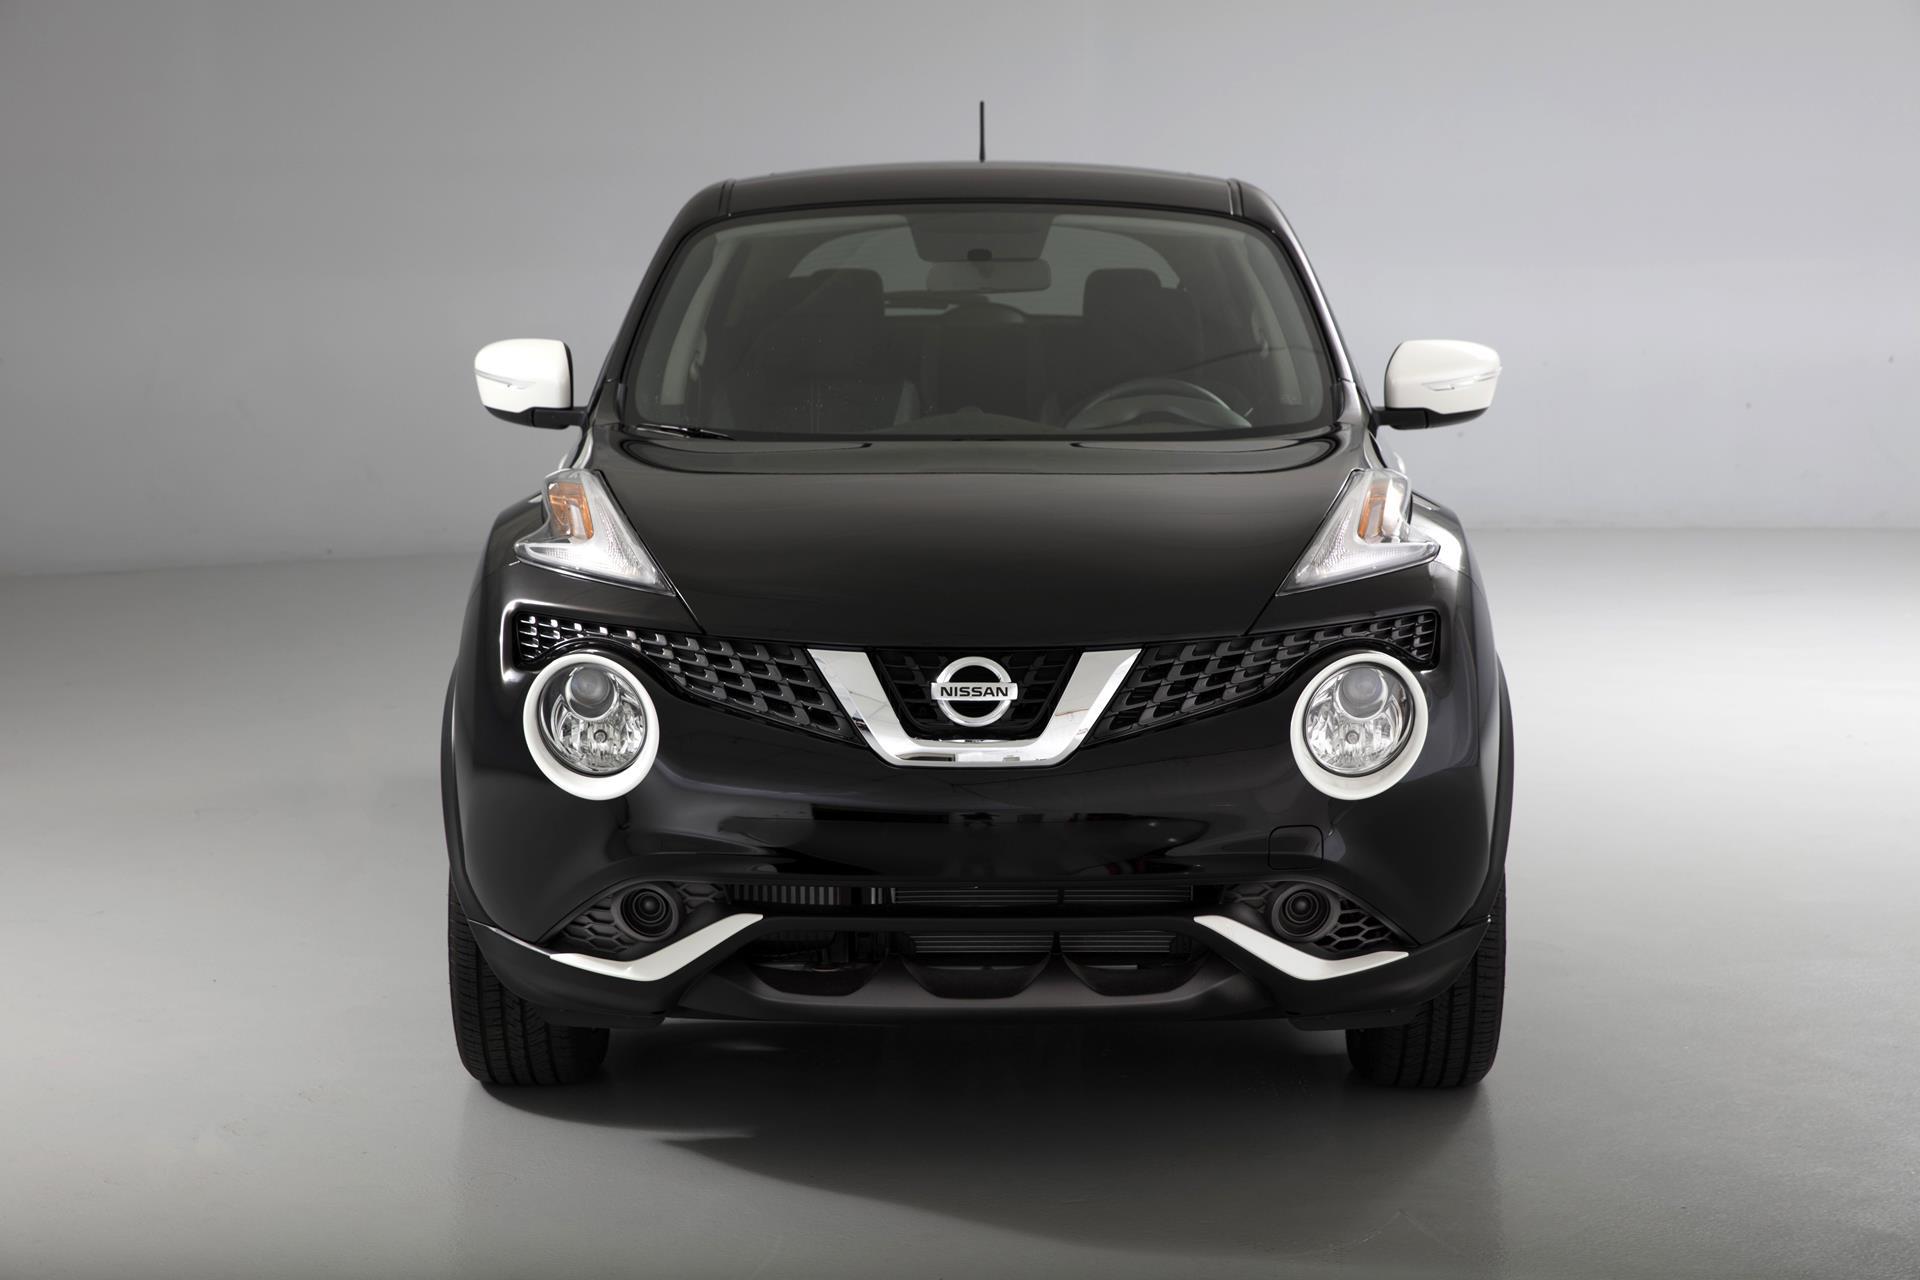 2017 Nissan JUKE Black Pearl Edition News and Information